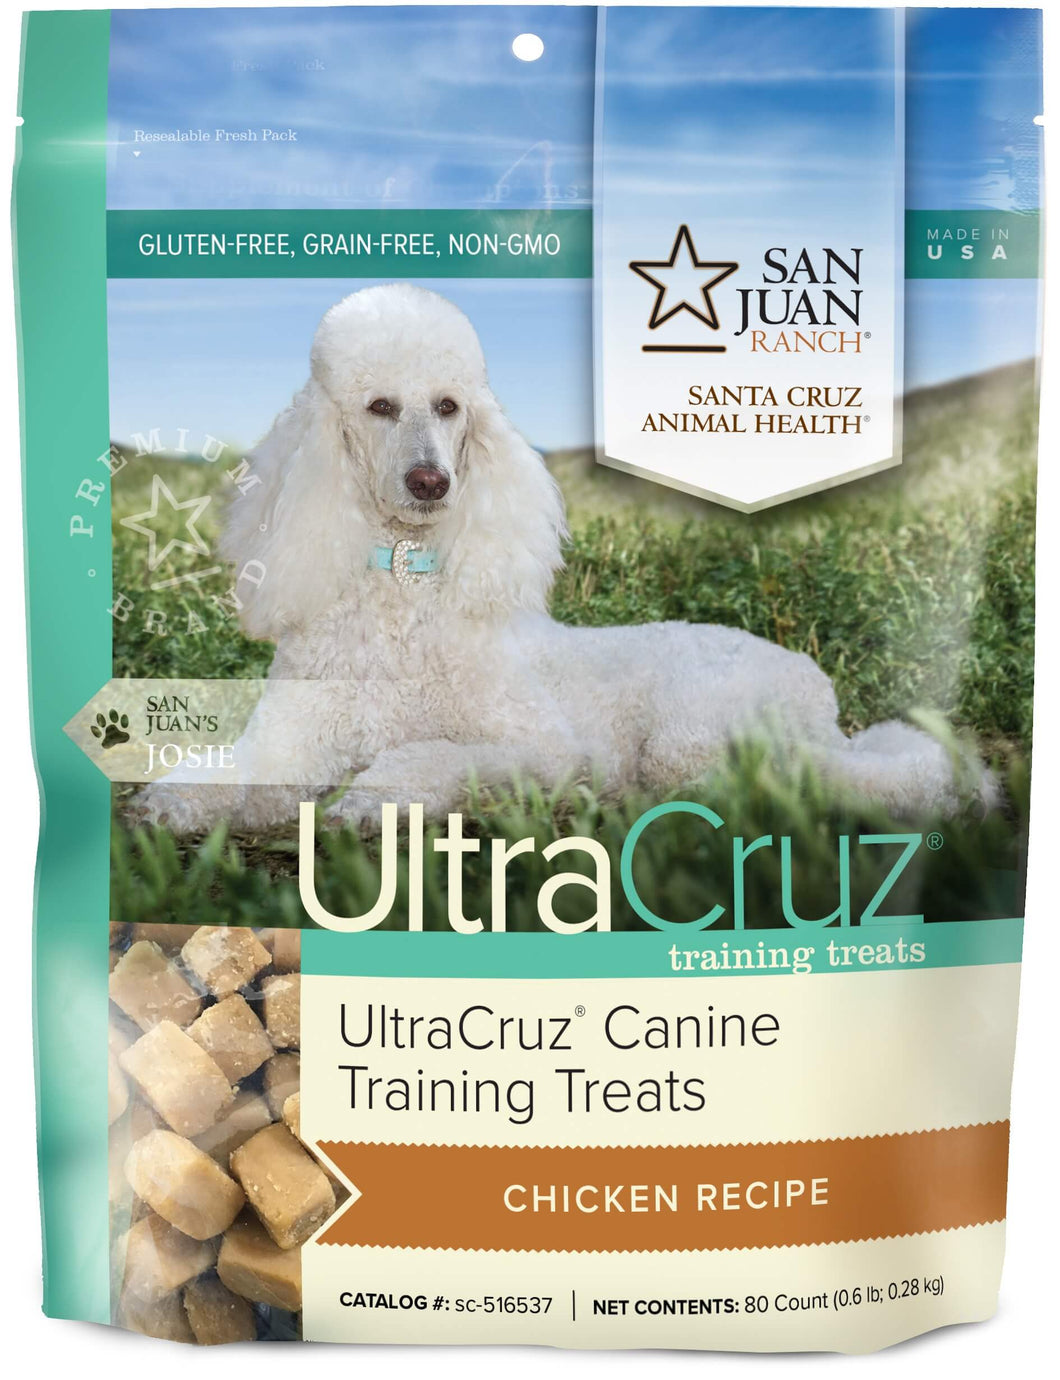 UltraCruz Canine Training Treats